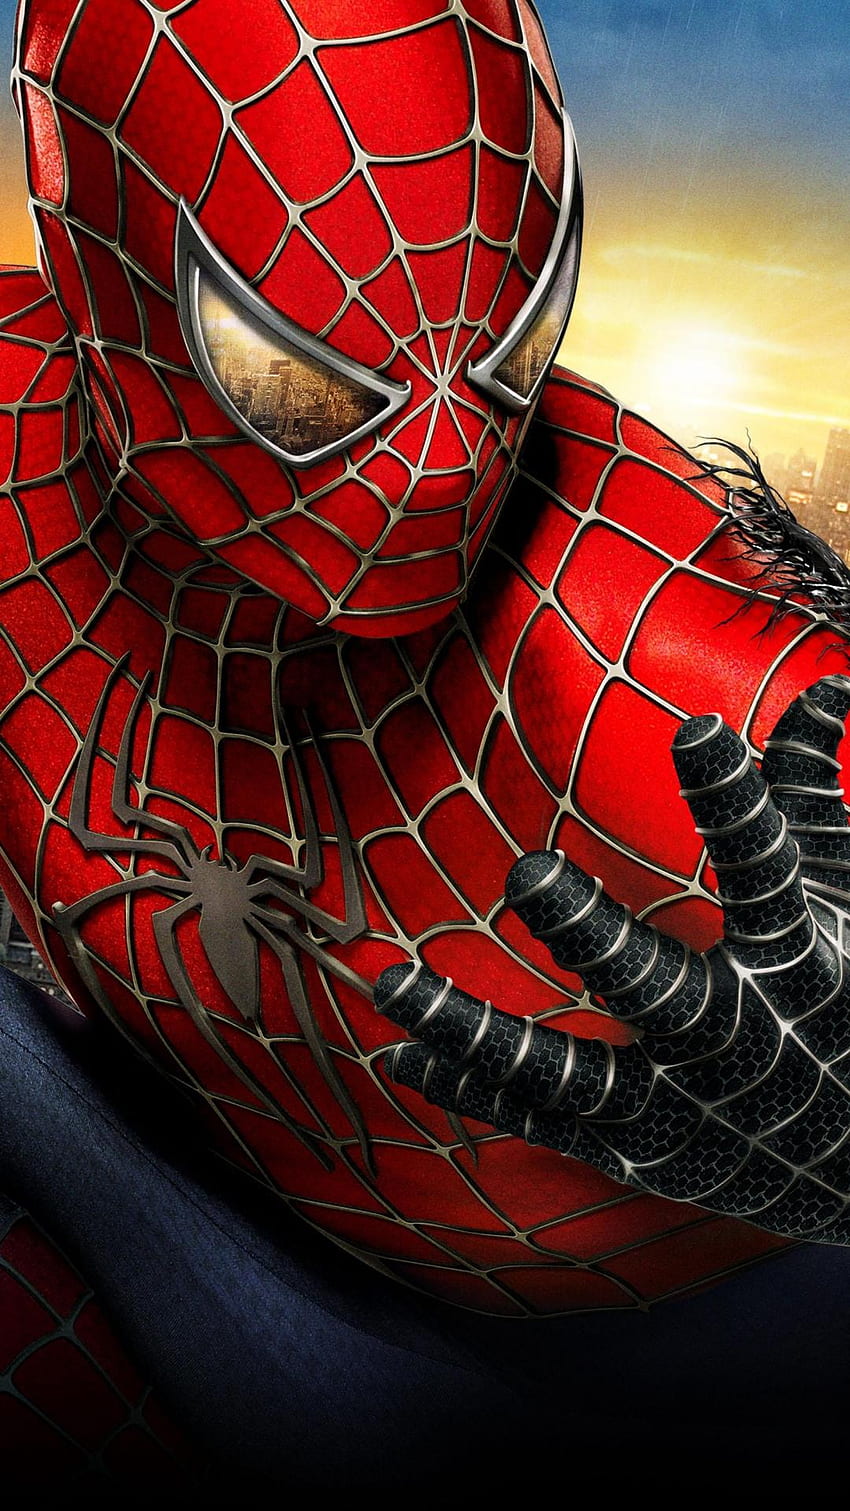 SpiderMan 3 HD wallpapers free download  Wallpaperbetter